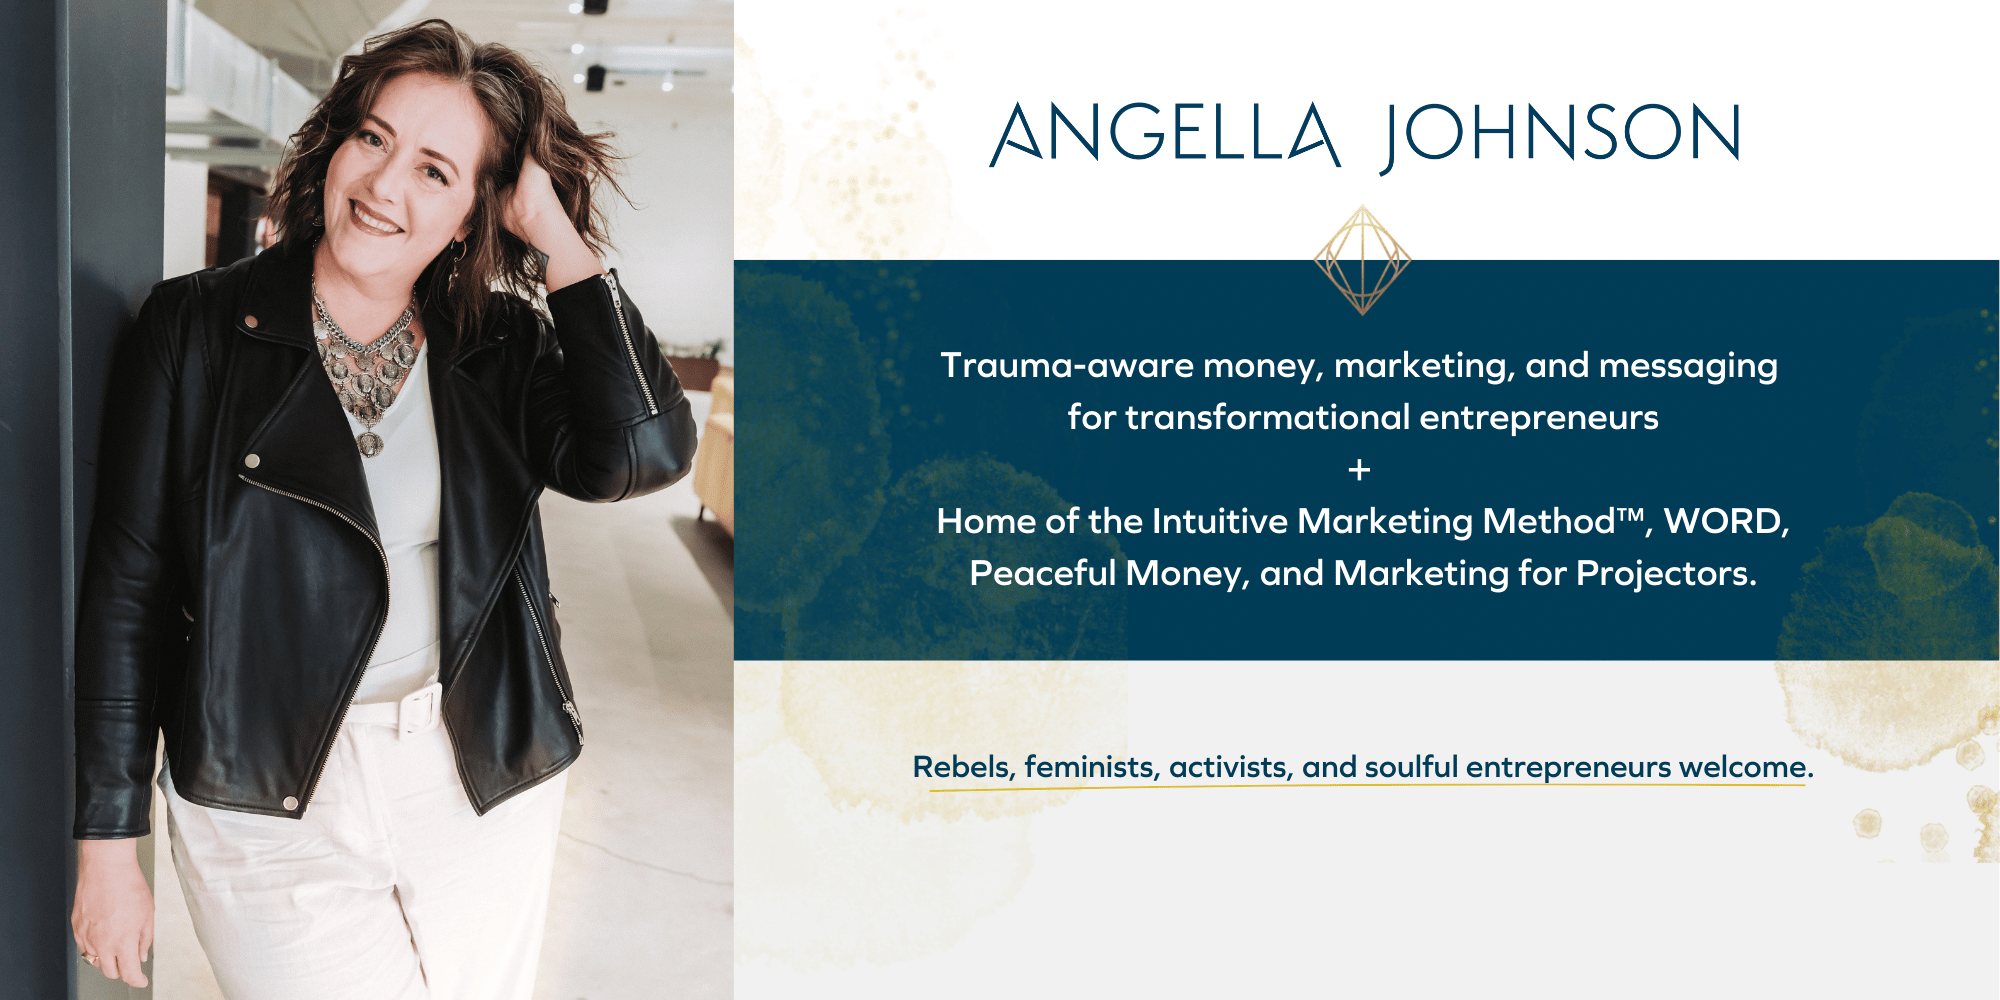 Image of Angella Johnson, the creator of Intuitive Marketing Method.